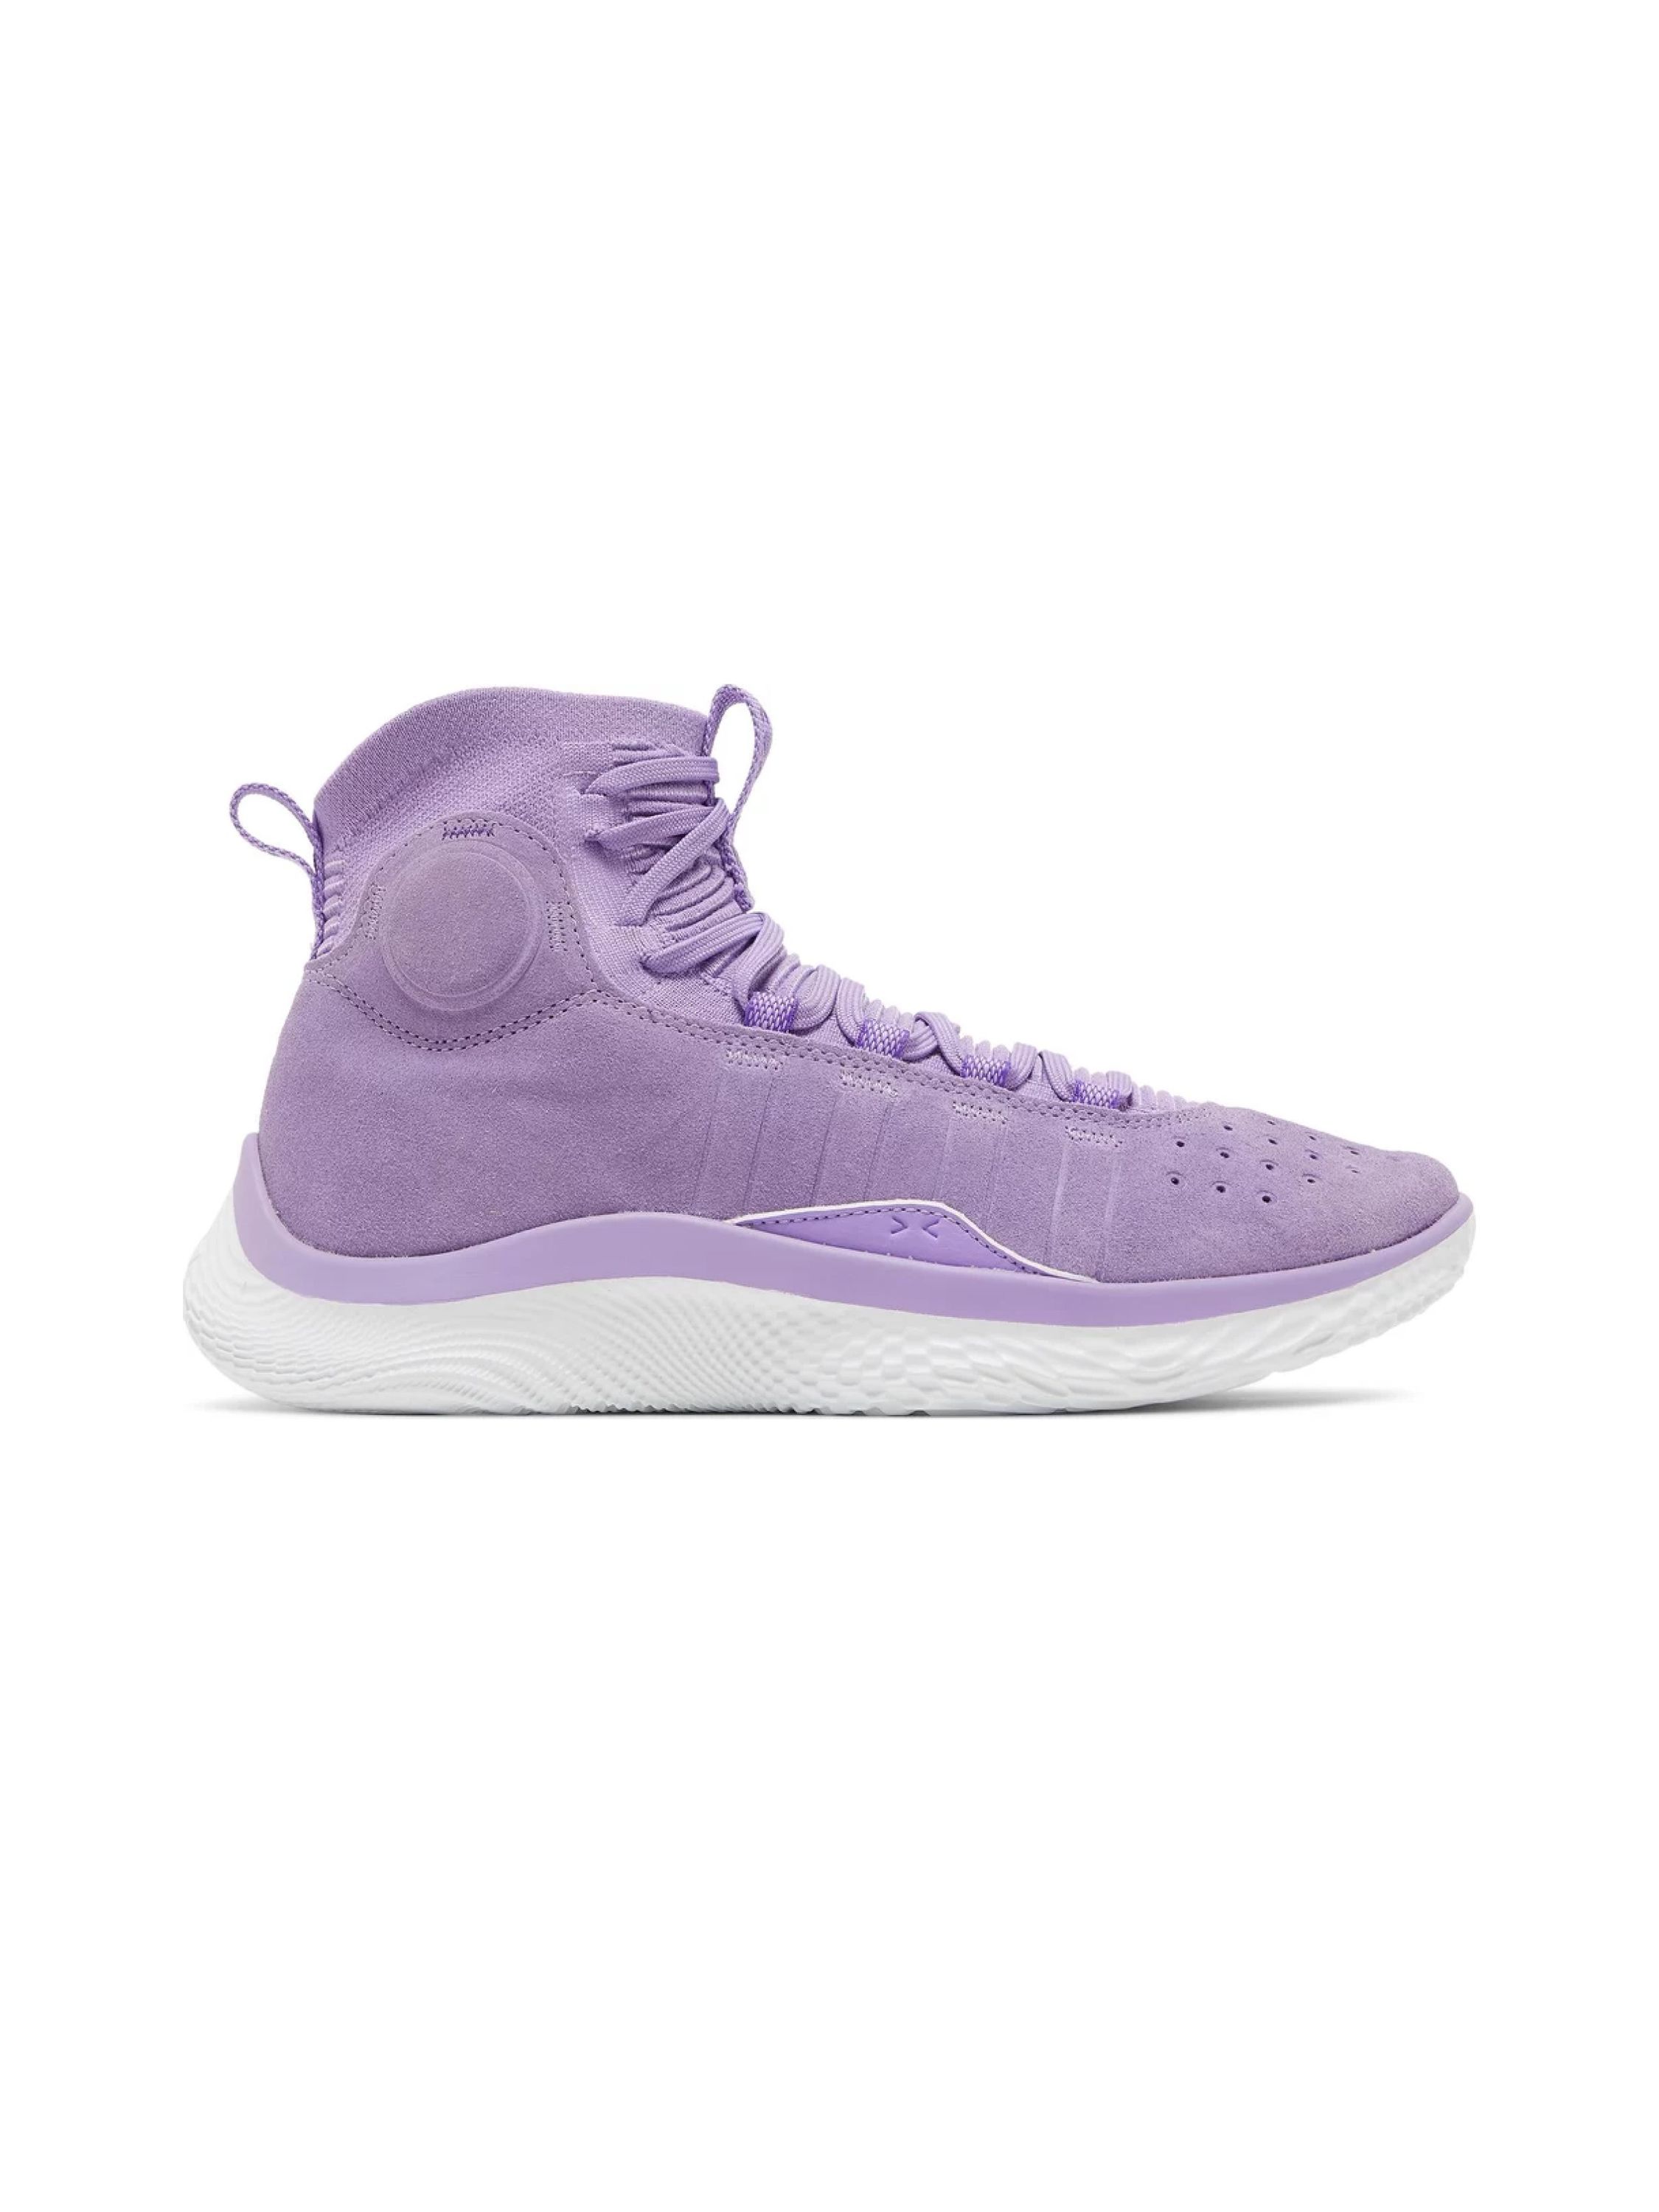 Lakers Magic Johnson Signed 2018 Nike Air Jordan 1 Size 15 Shoes BAS  Witnessed